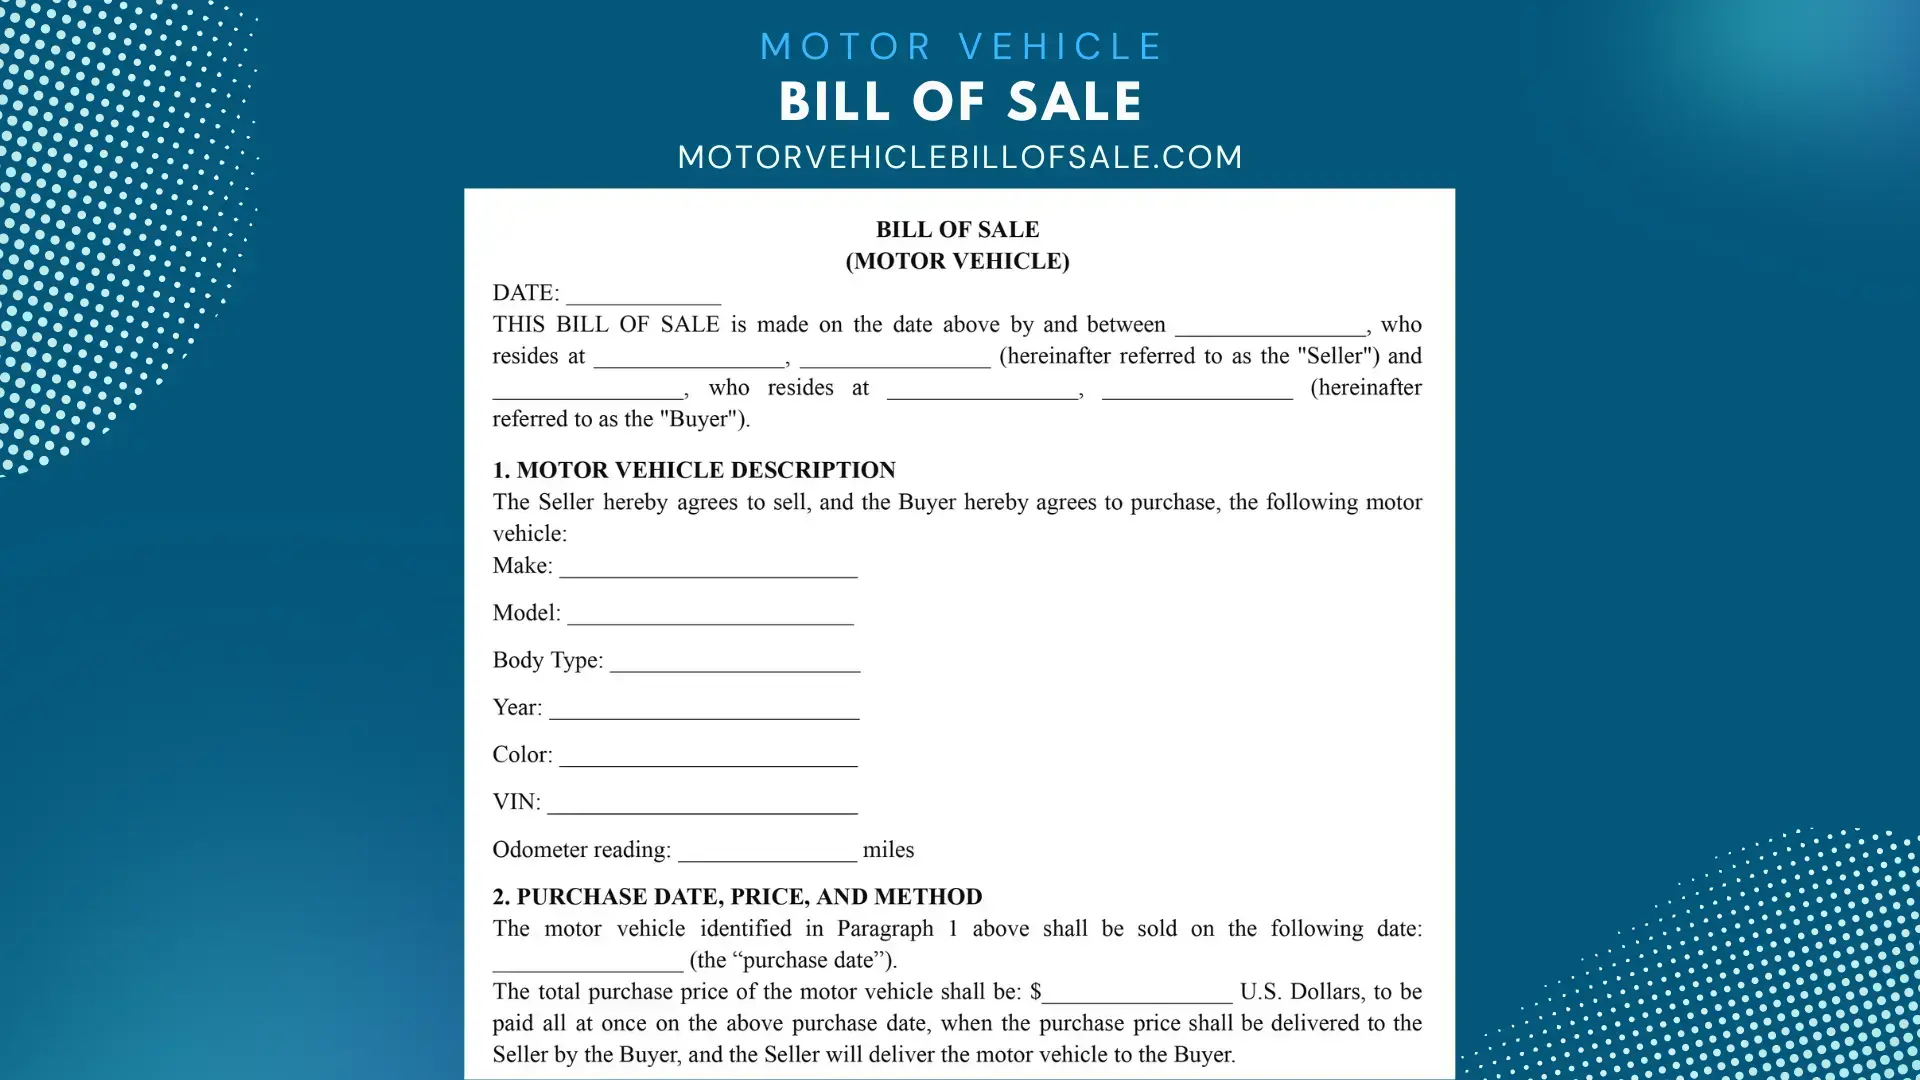 Motor Vehicle Bill of Sale